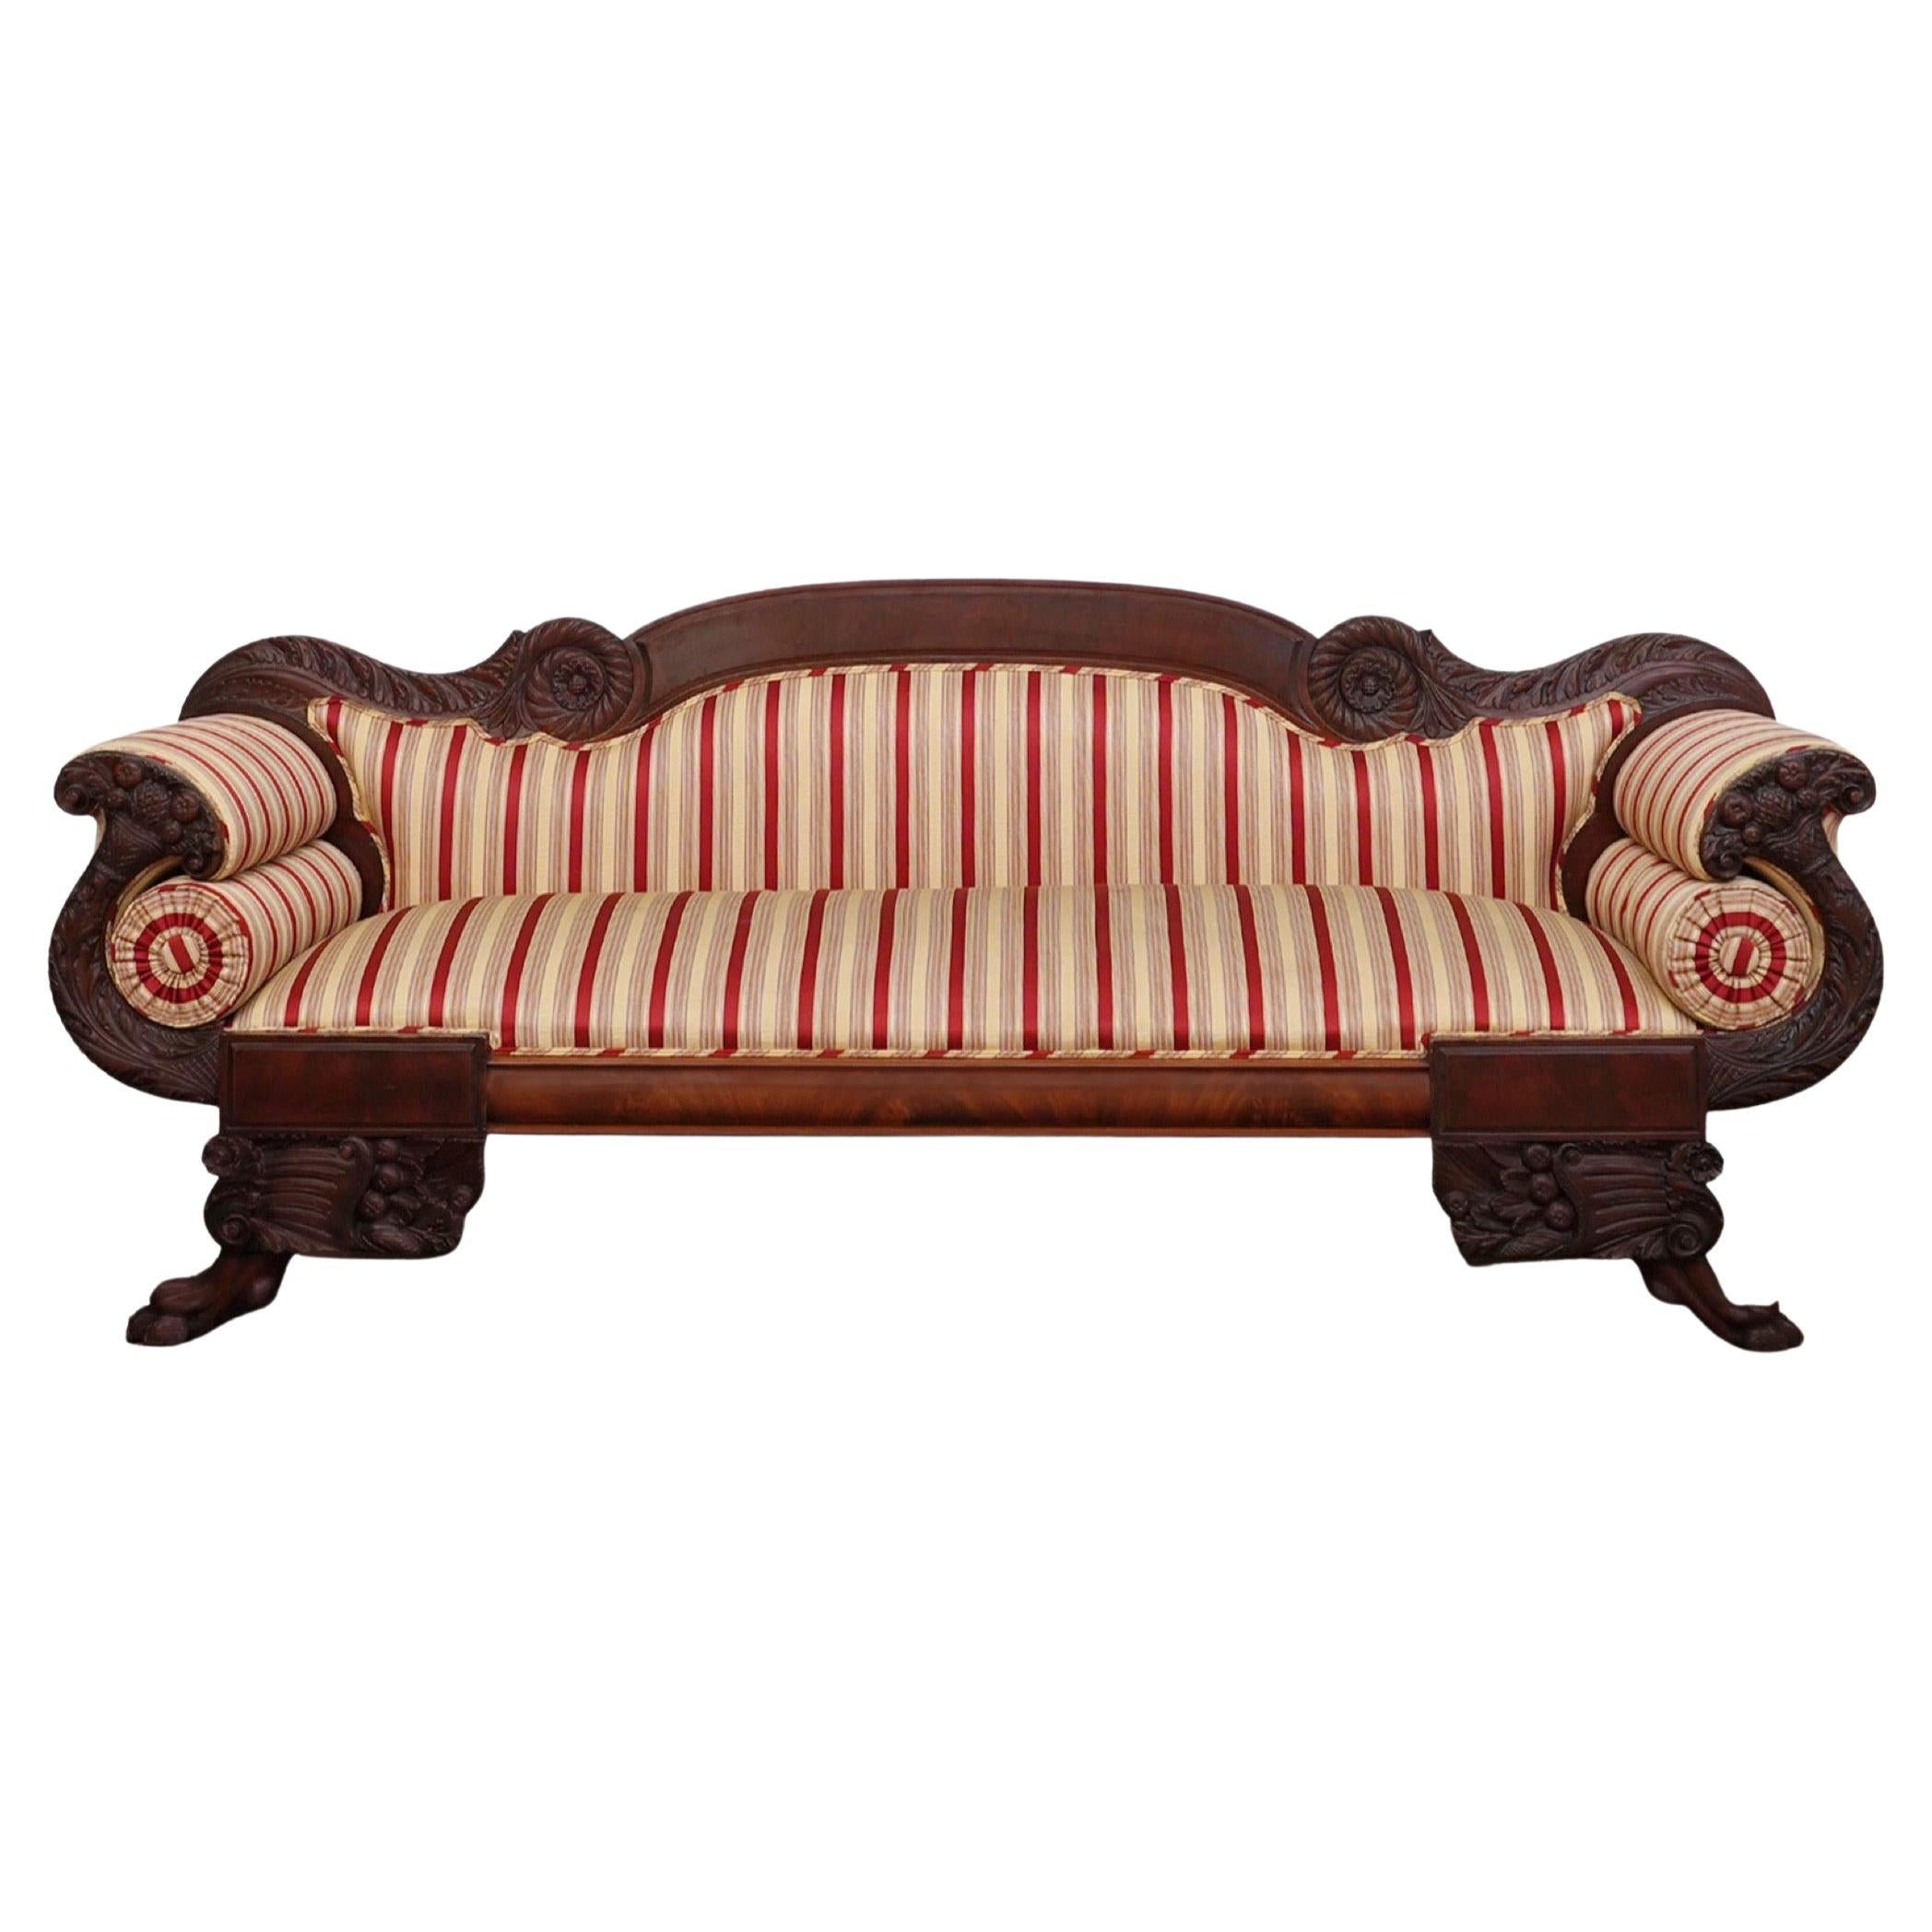 Striped American Empire Style Sofa For Sale